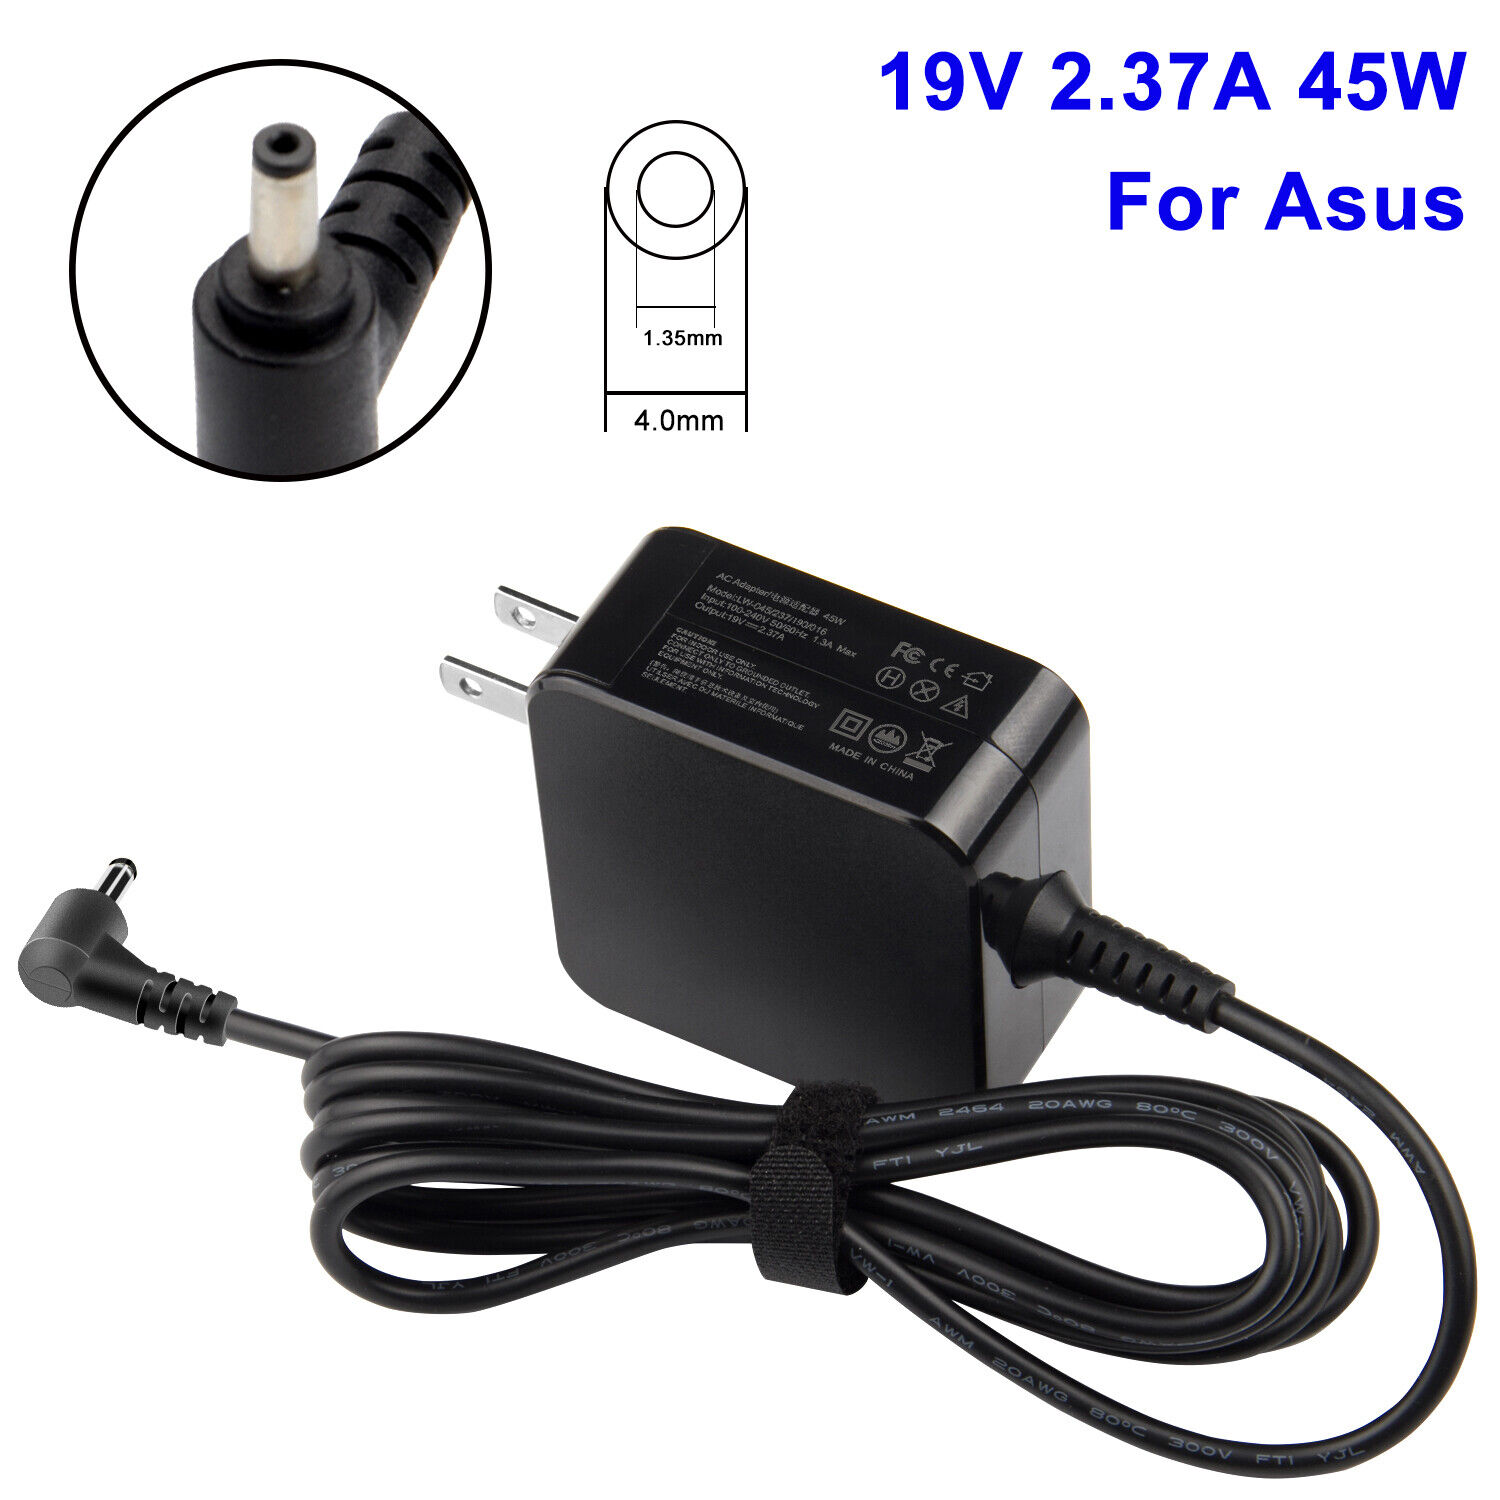 AC Adapter Power Charger For ASUS E410MA E410M E410 E210M E210E510 E406M E410M